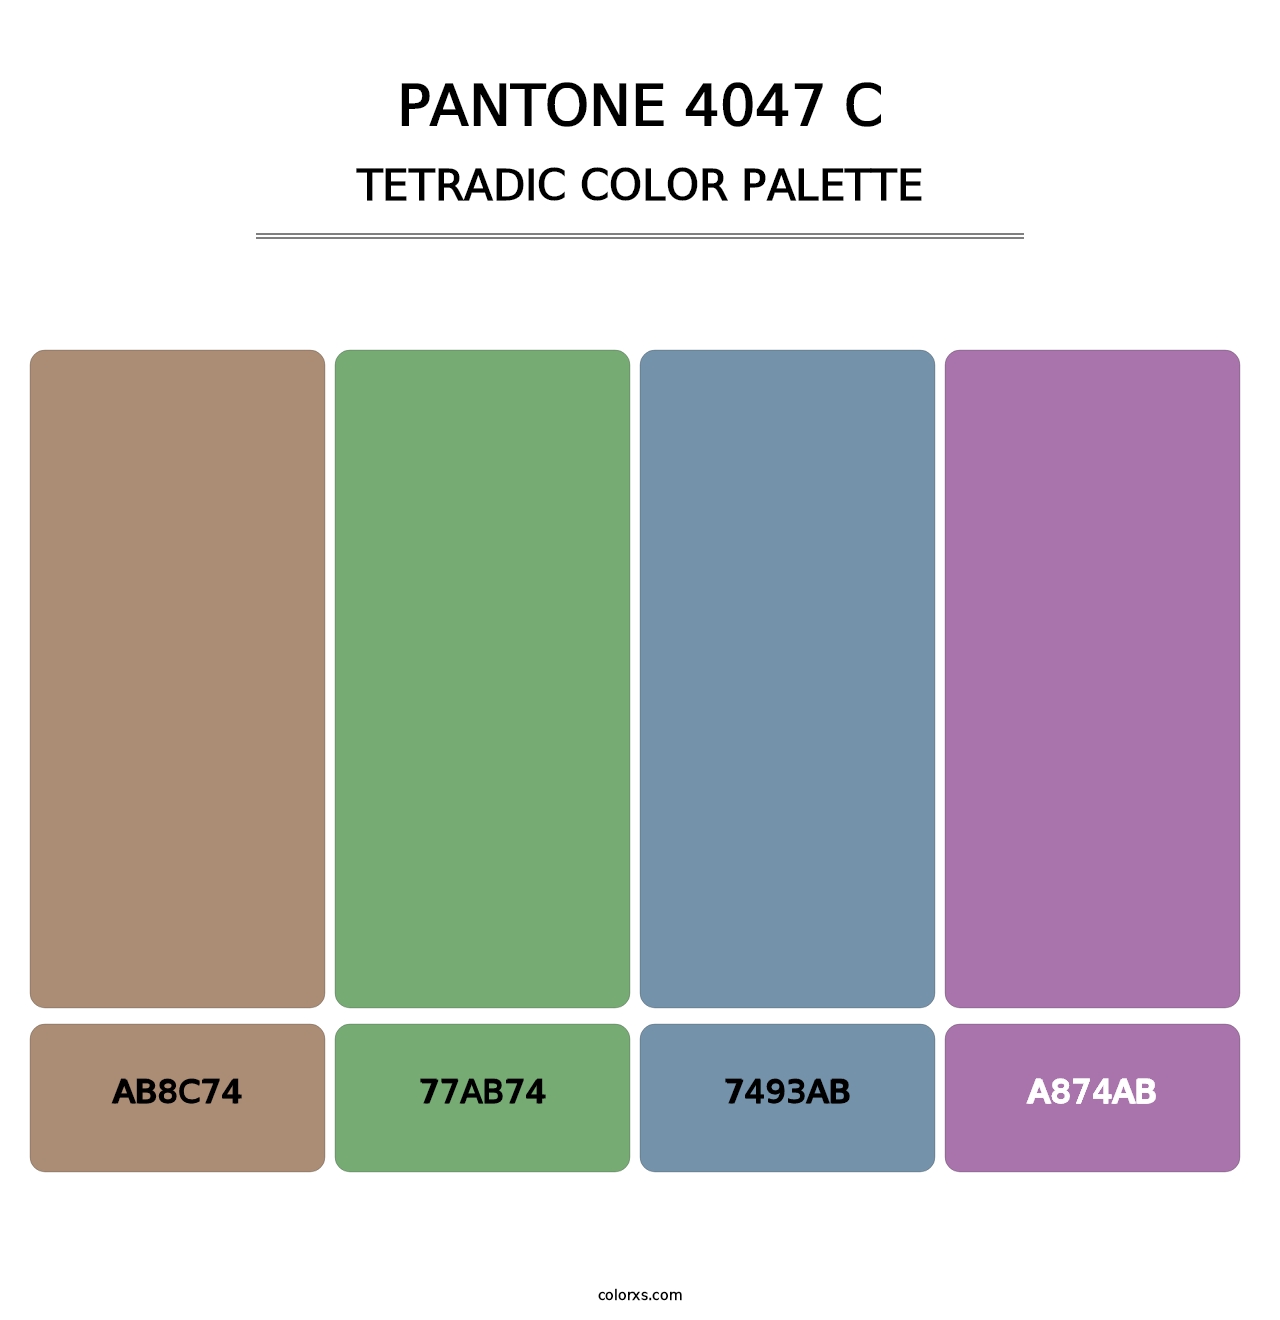 PANTONE 4047 C - Tetradic Color Palette